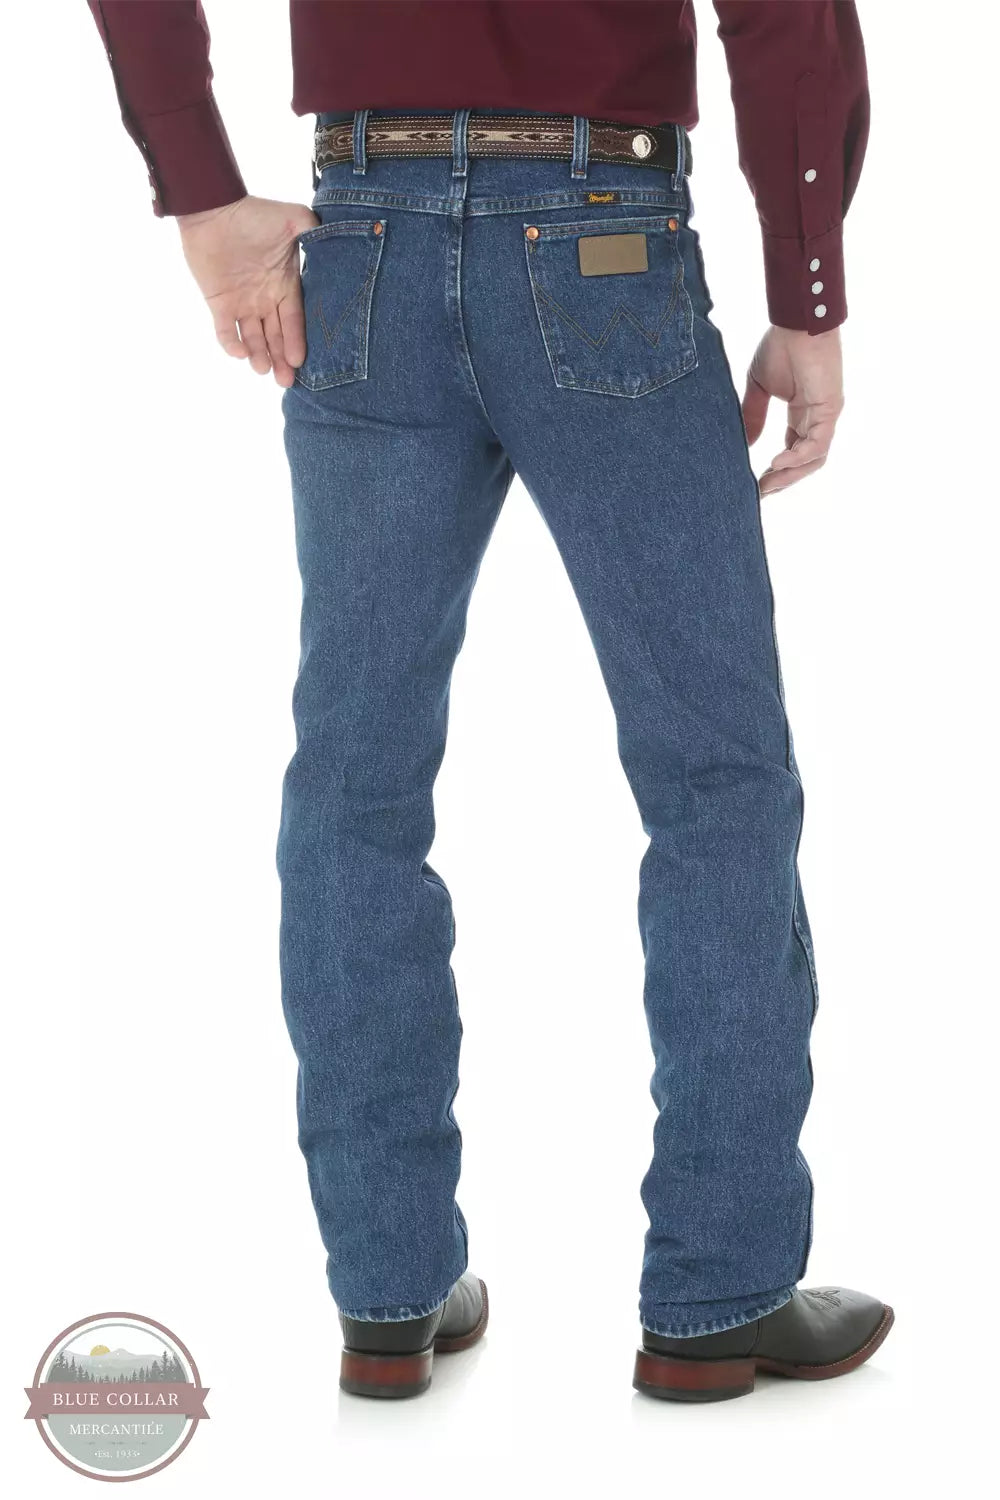 Wrangler 936GBK Cowboy Cut® Slim Fit Jeans in Stonewash Back View